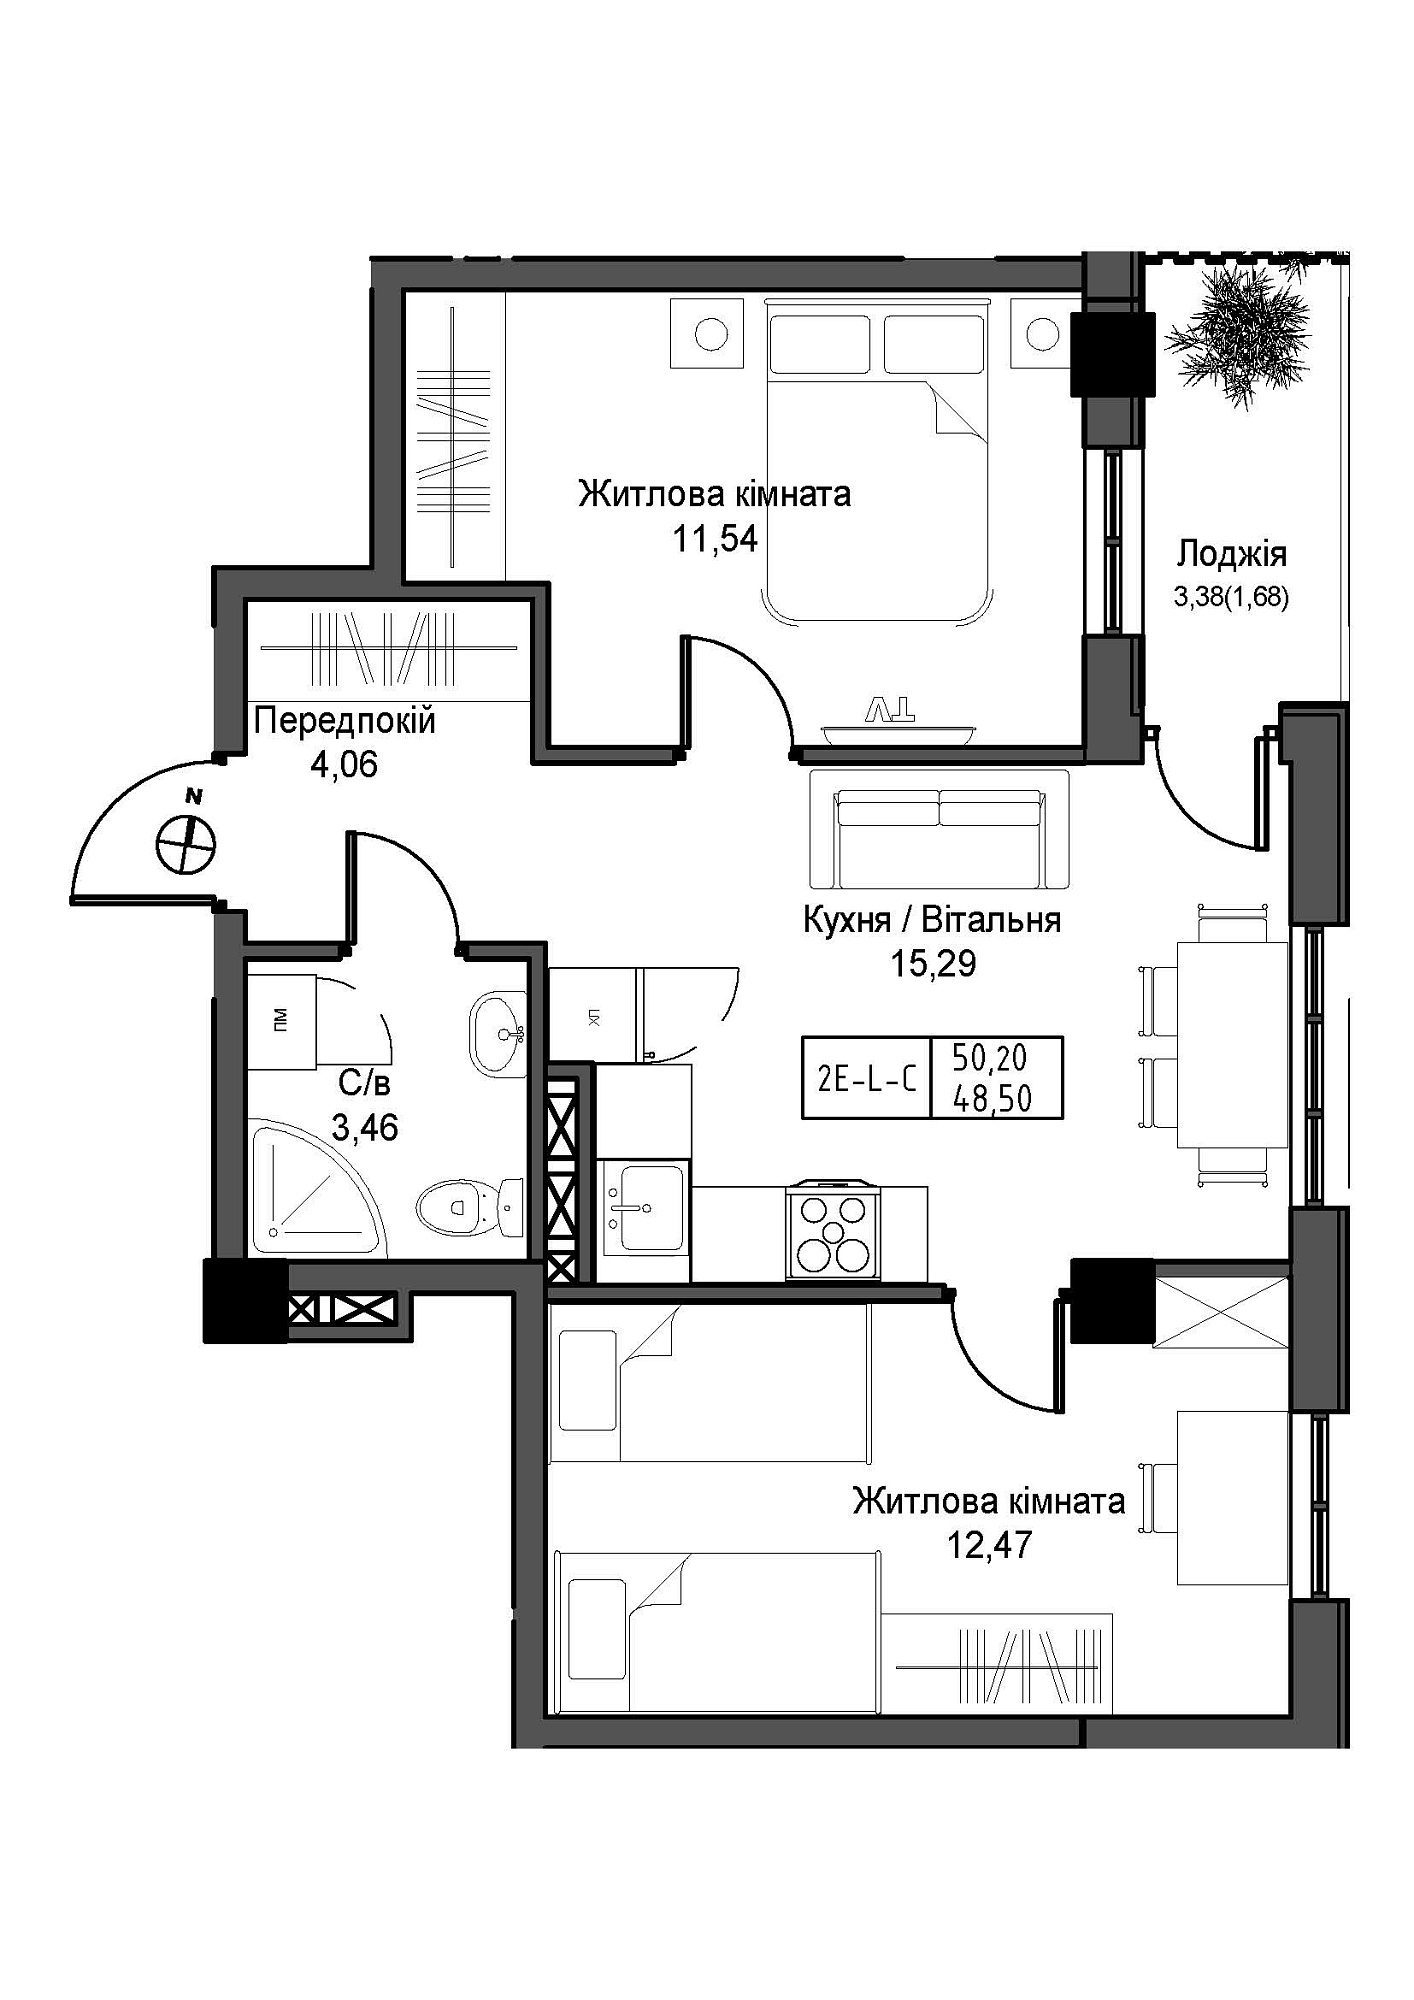 Planning 2-rm flats area 48.5m2, UM-007-07/0007.